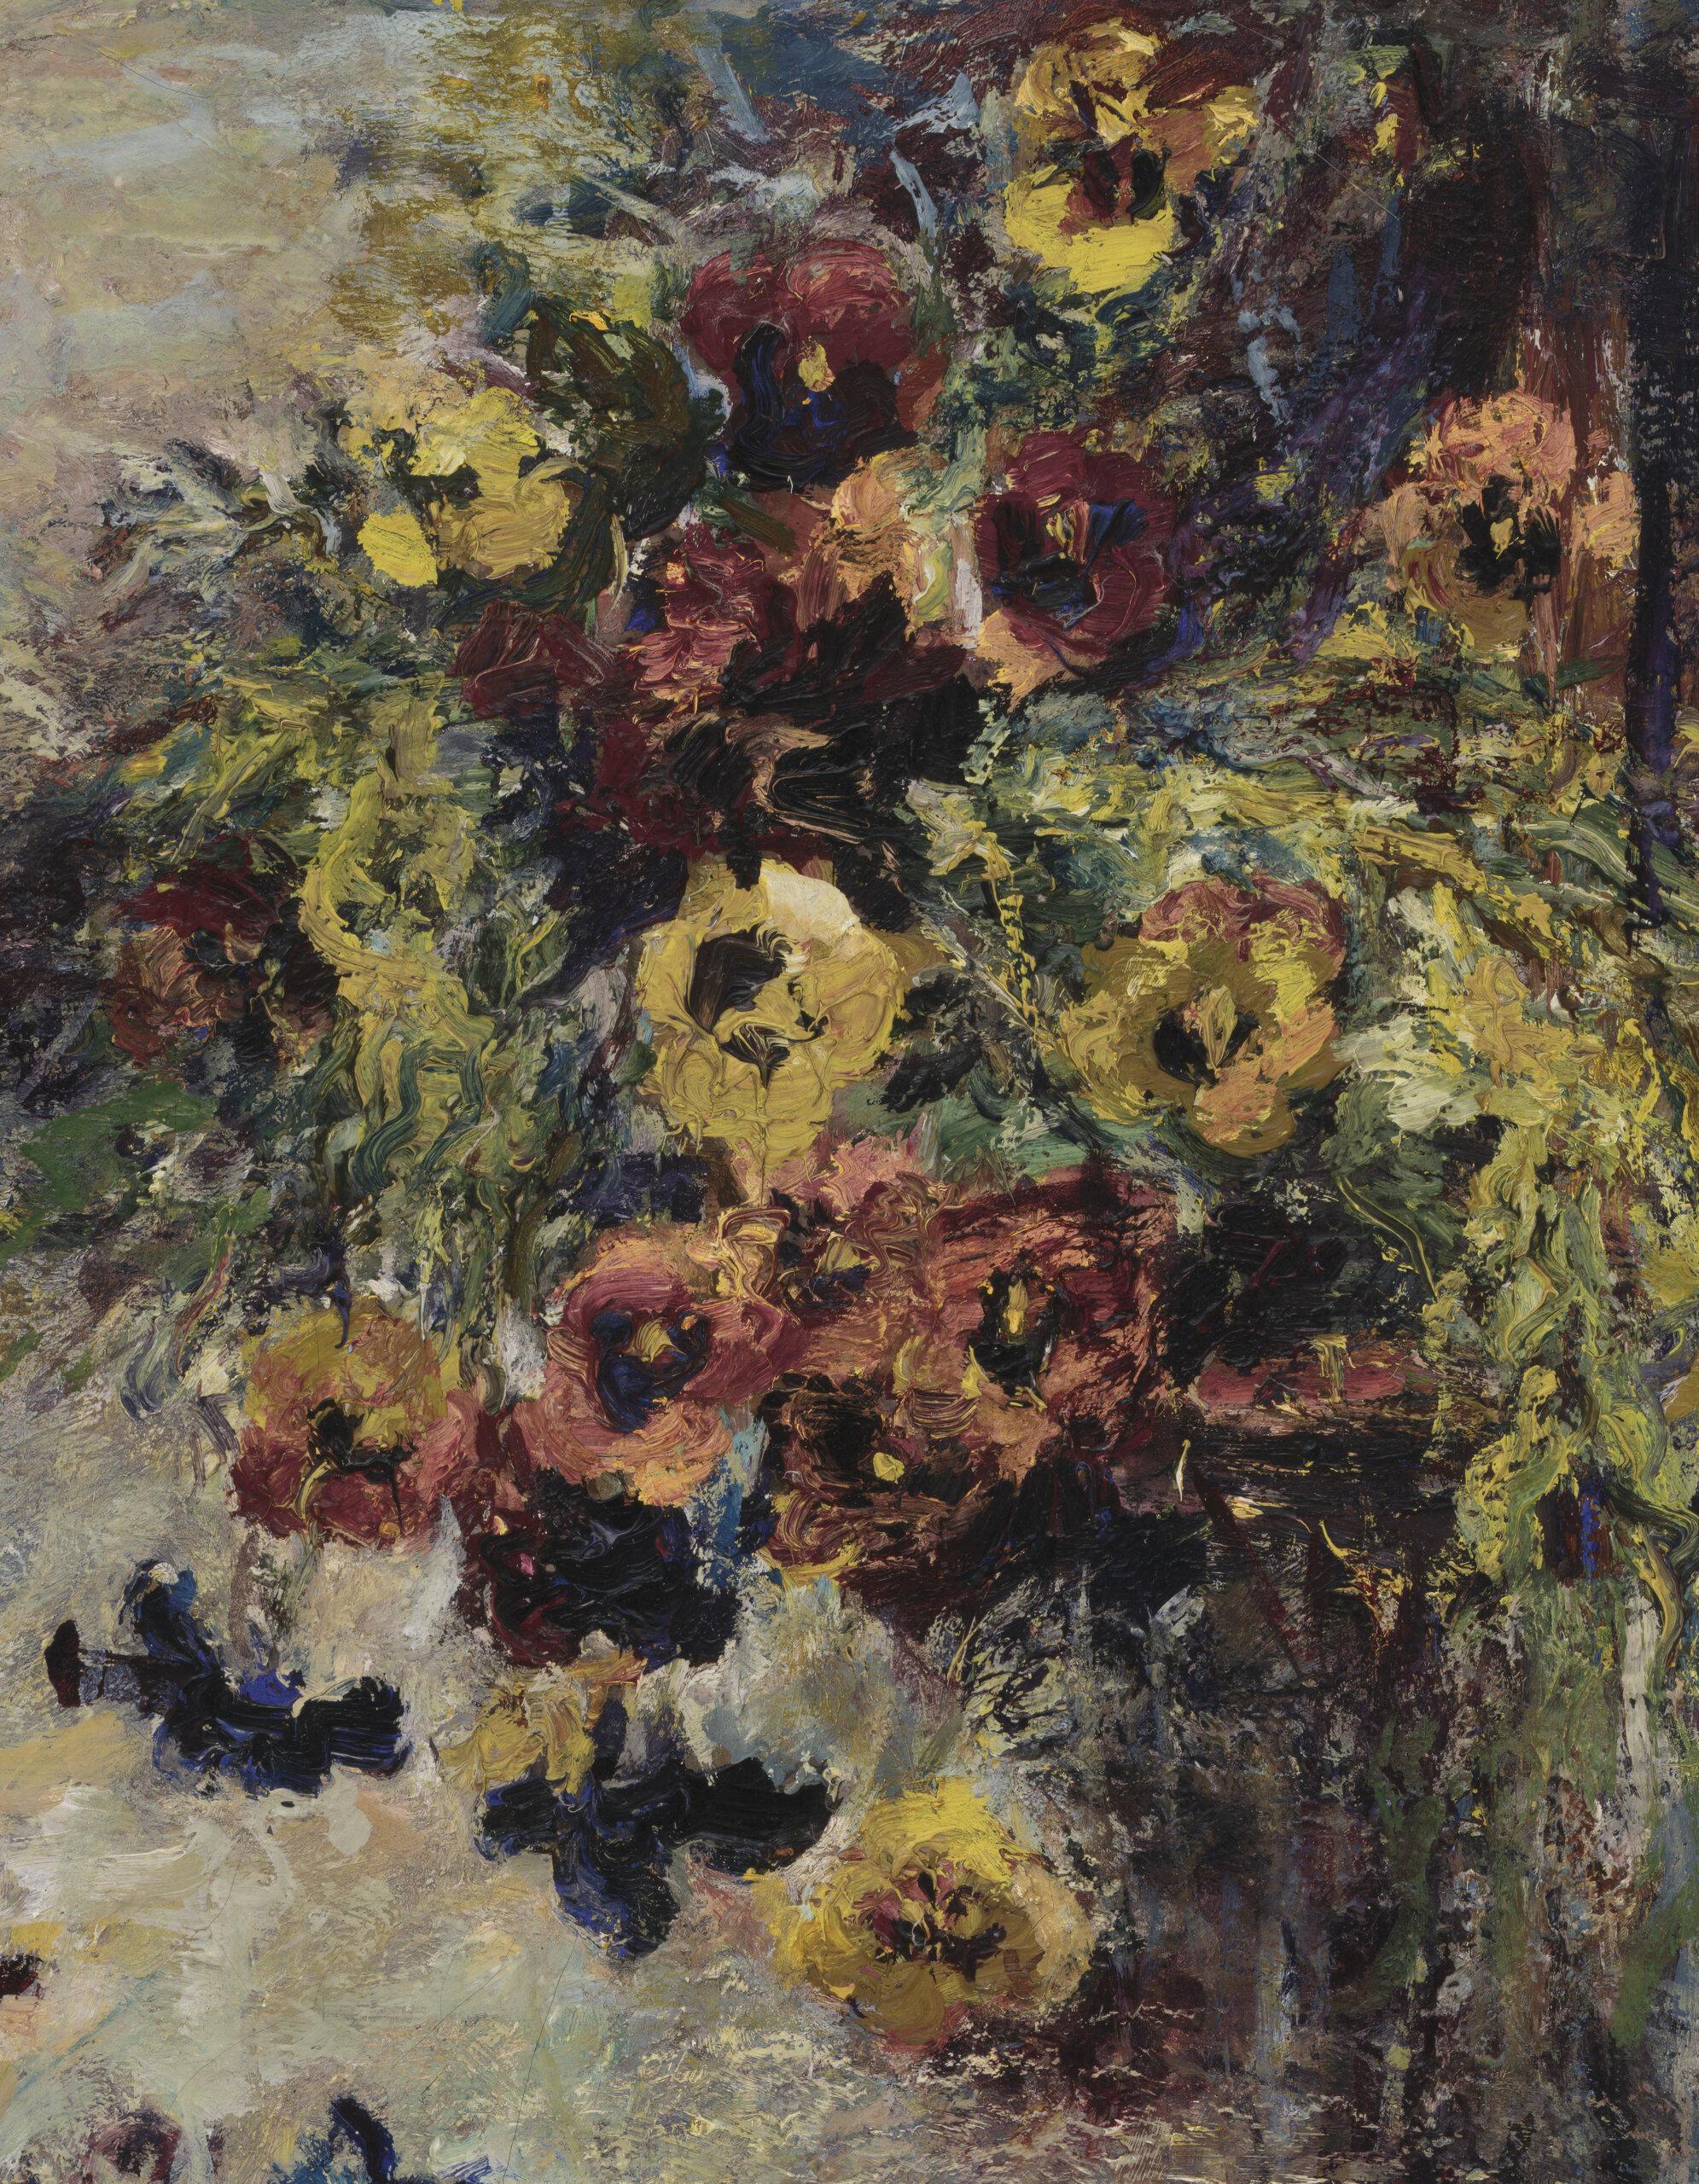 Ann Audova “Lillemeri”, 1947. 92 x 68 cm.